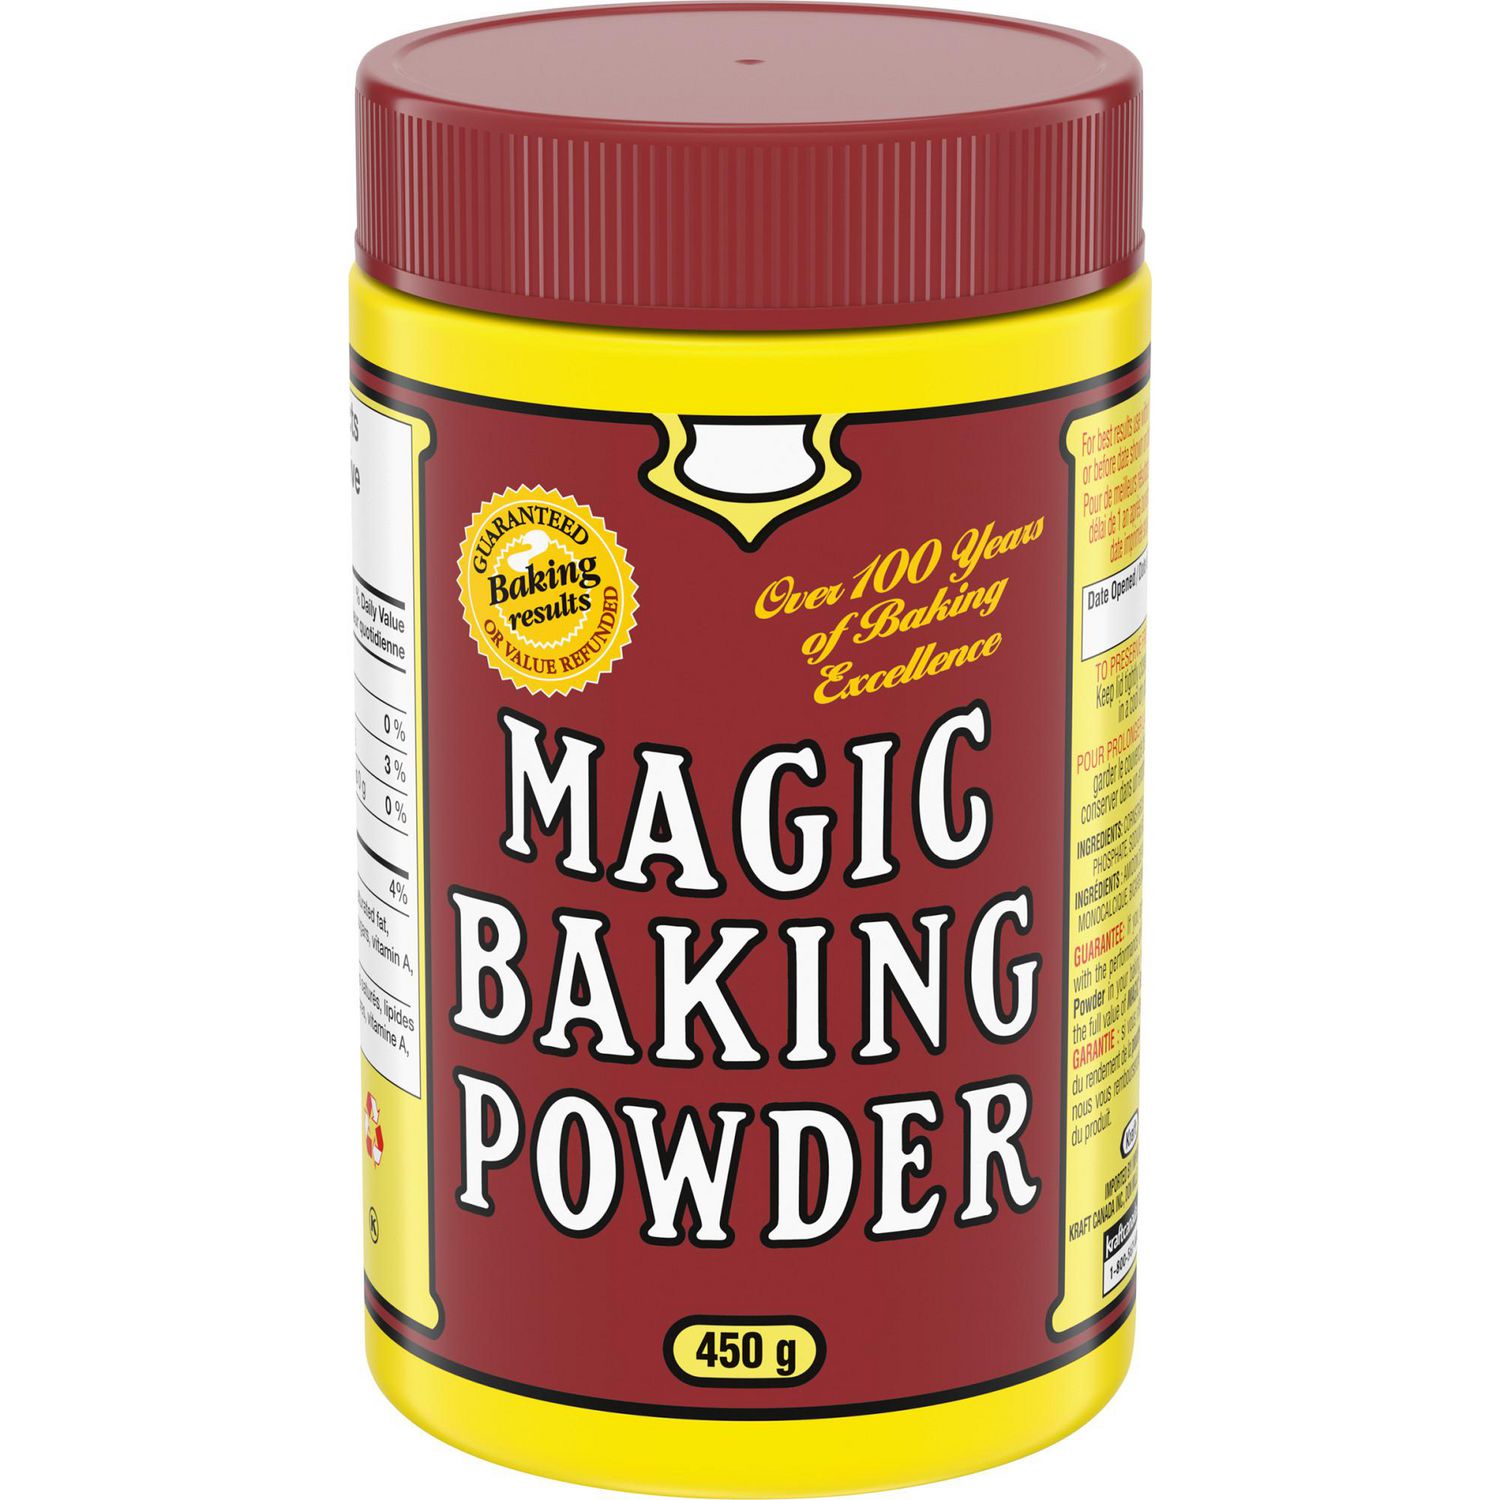 Baking Powder. Baking Powder of the Dough. Royal Baking Powder. Baking Powder *5.